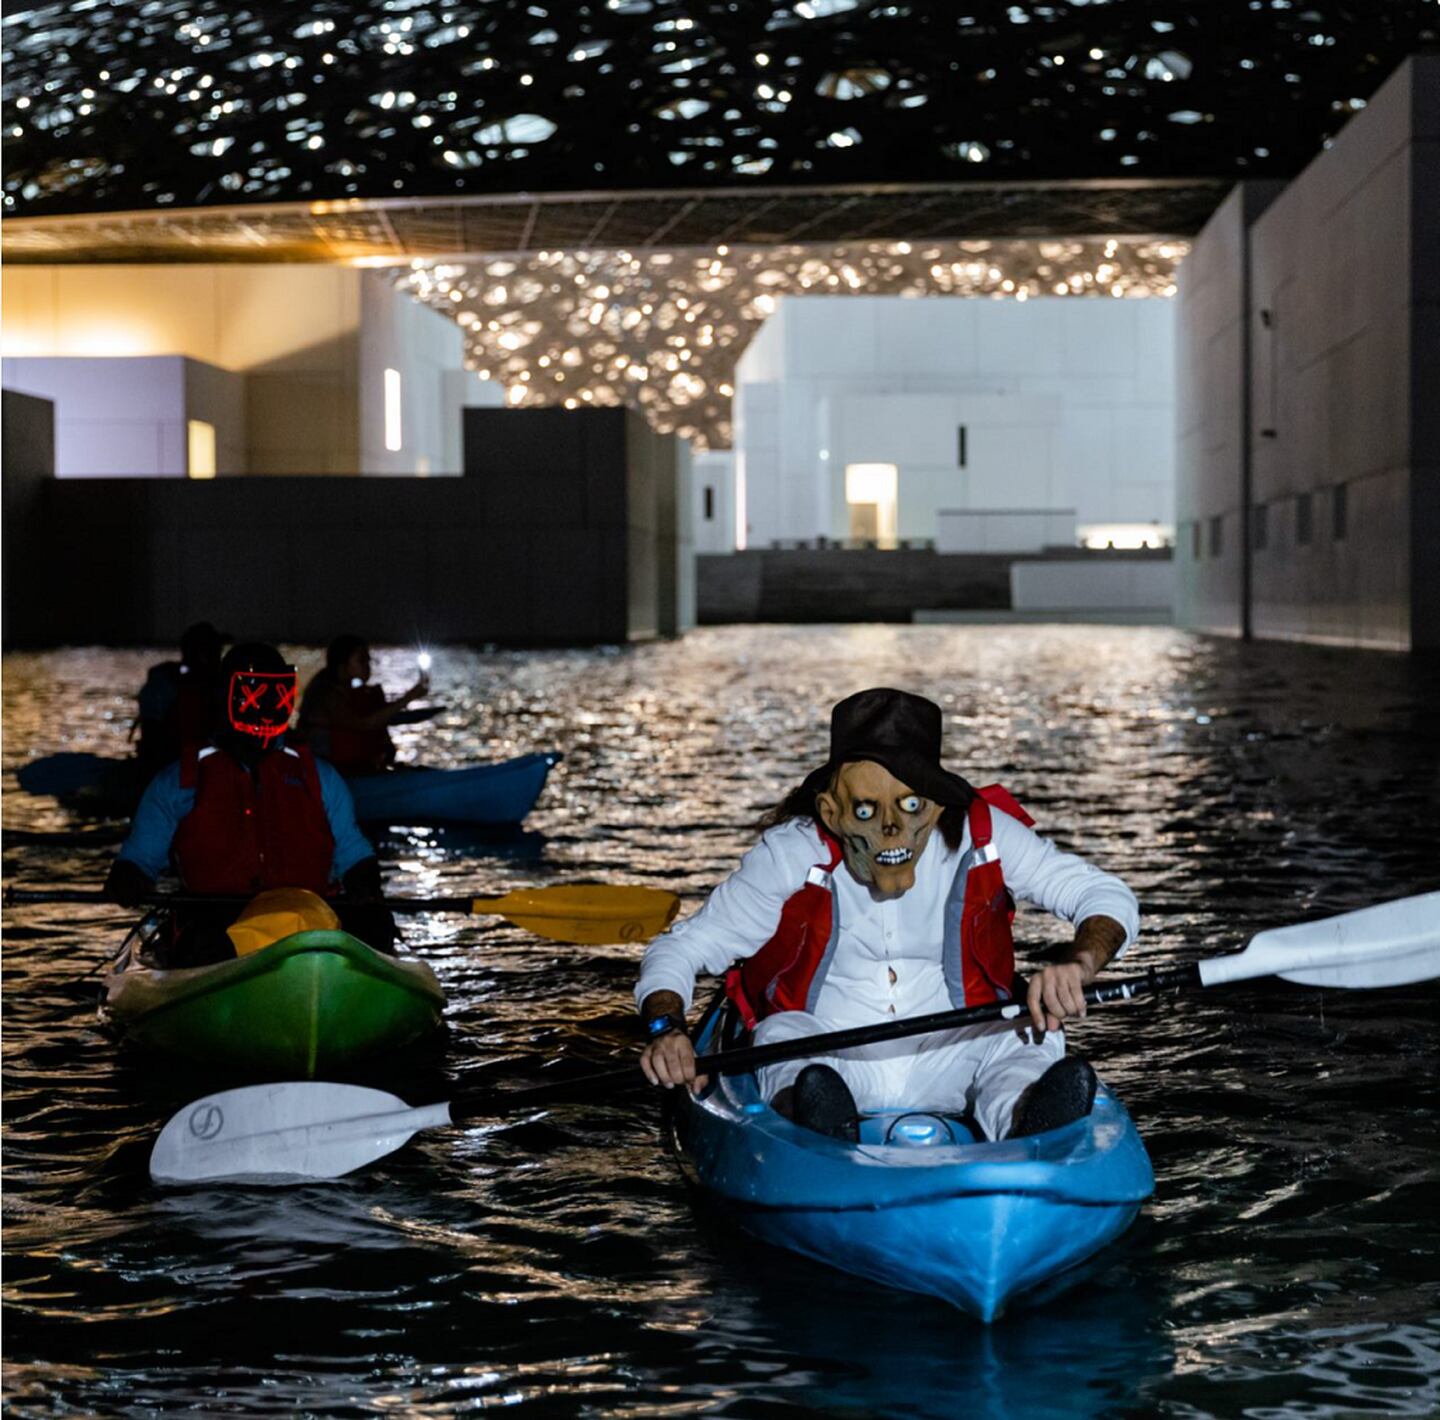 Louvre Abu Dhabi is having a themed kayaking night for Halloween. Photo: Louvre Abu Dhabi